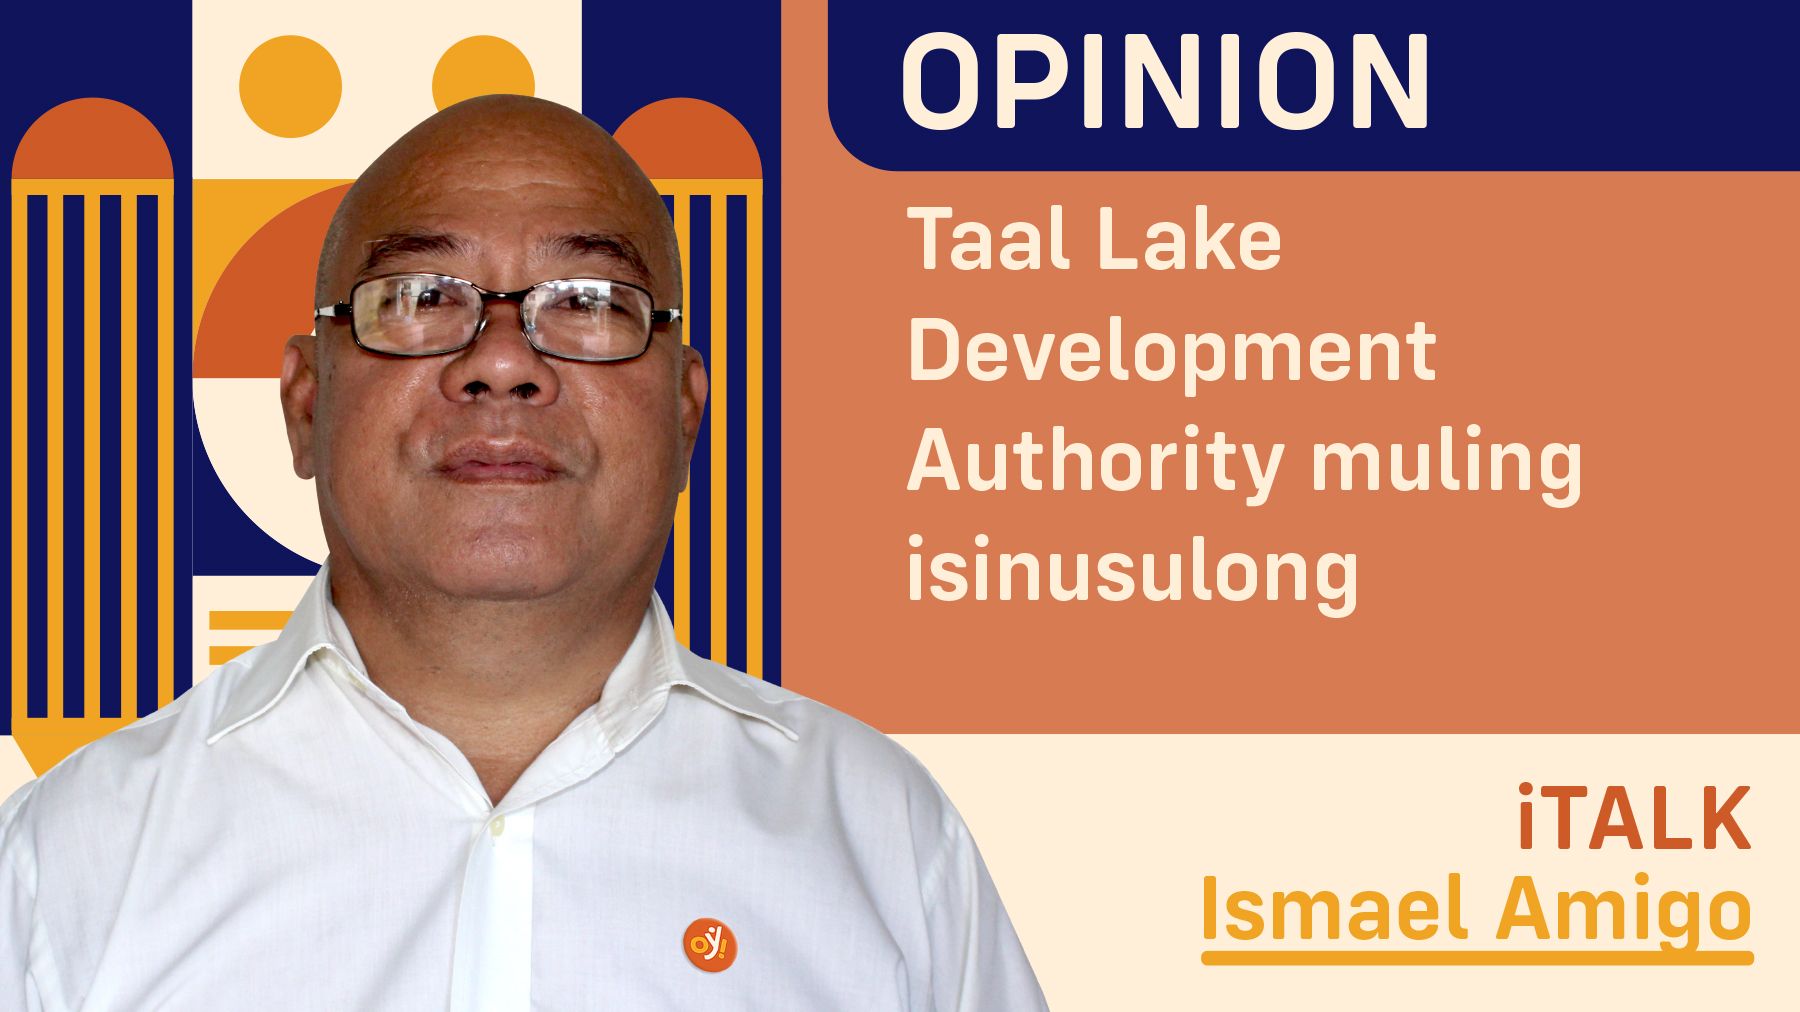 Taal Lake Development Authority muling isinusulong